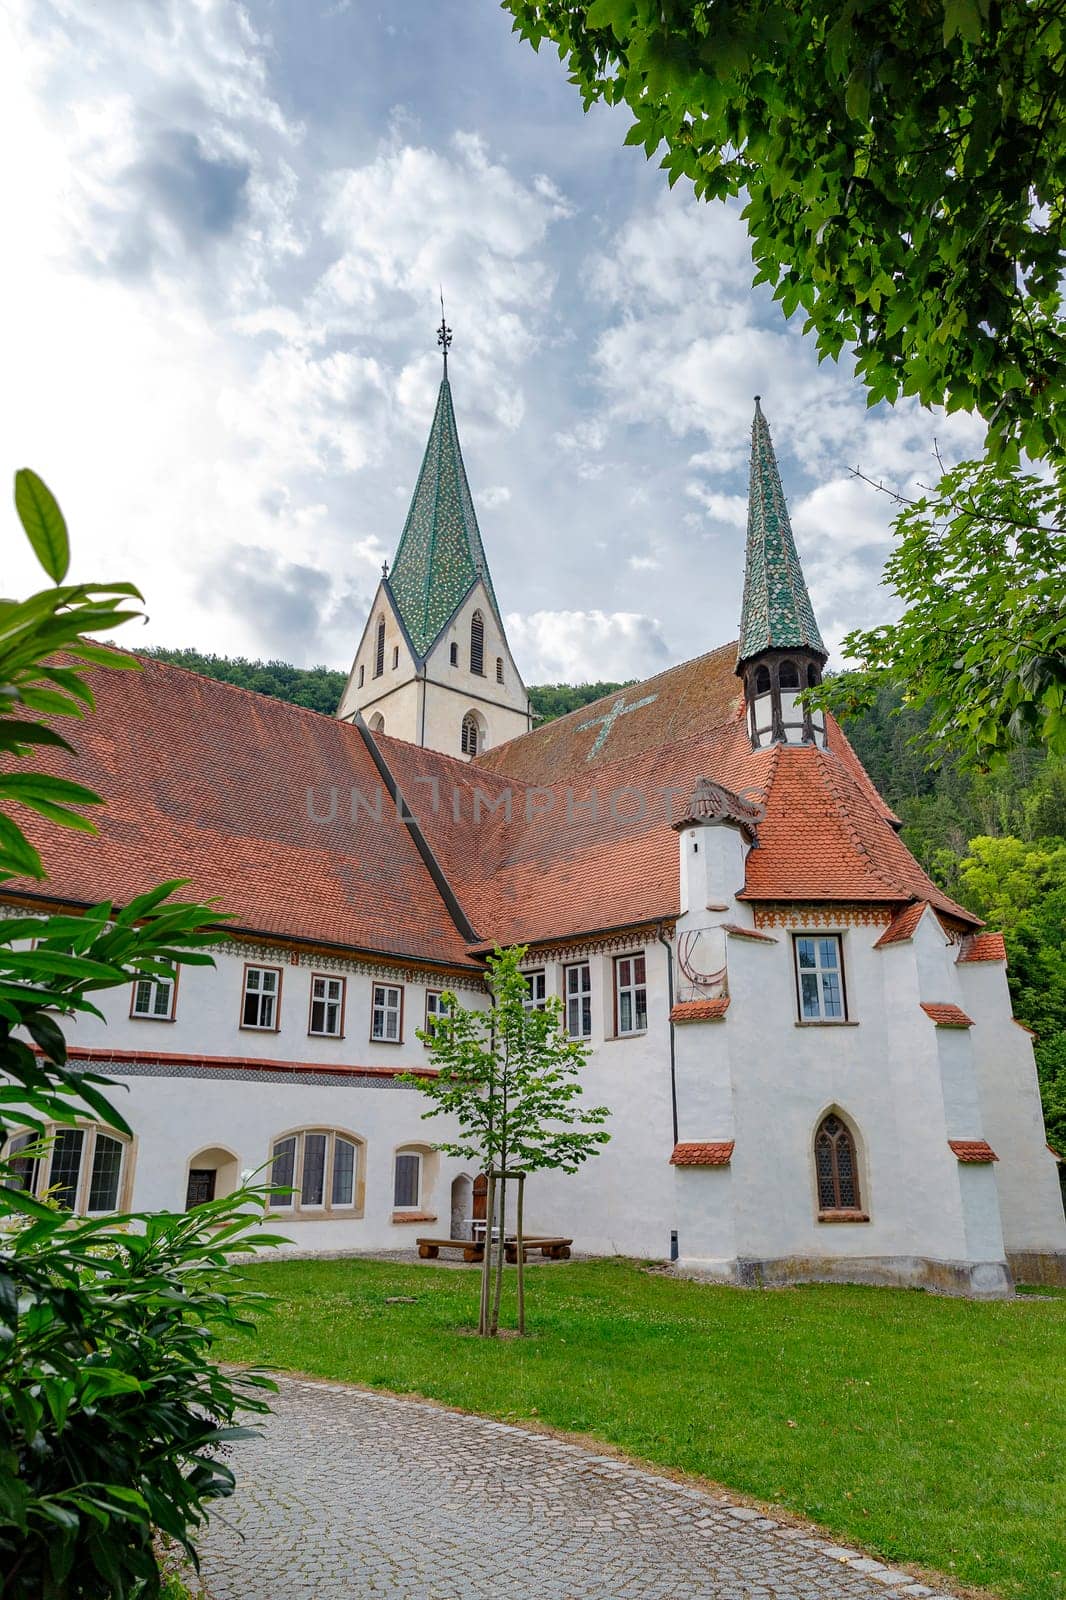 A part of Blaubeuren Abbey in the city of Blaubeuren, Germany by EdVal